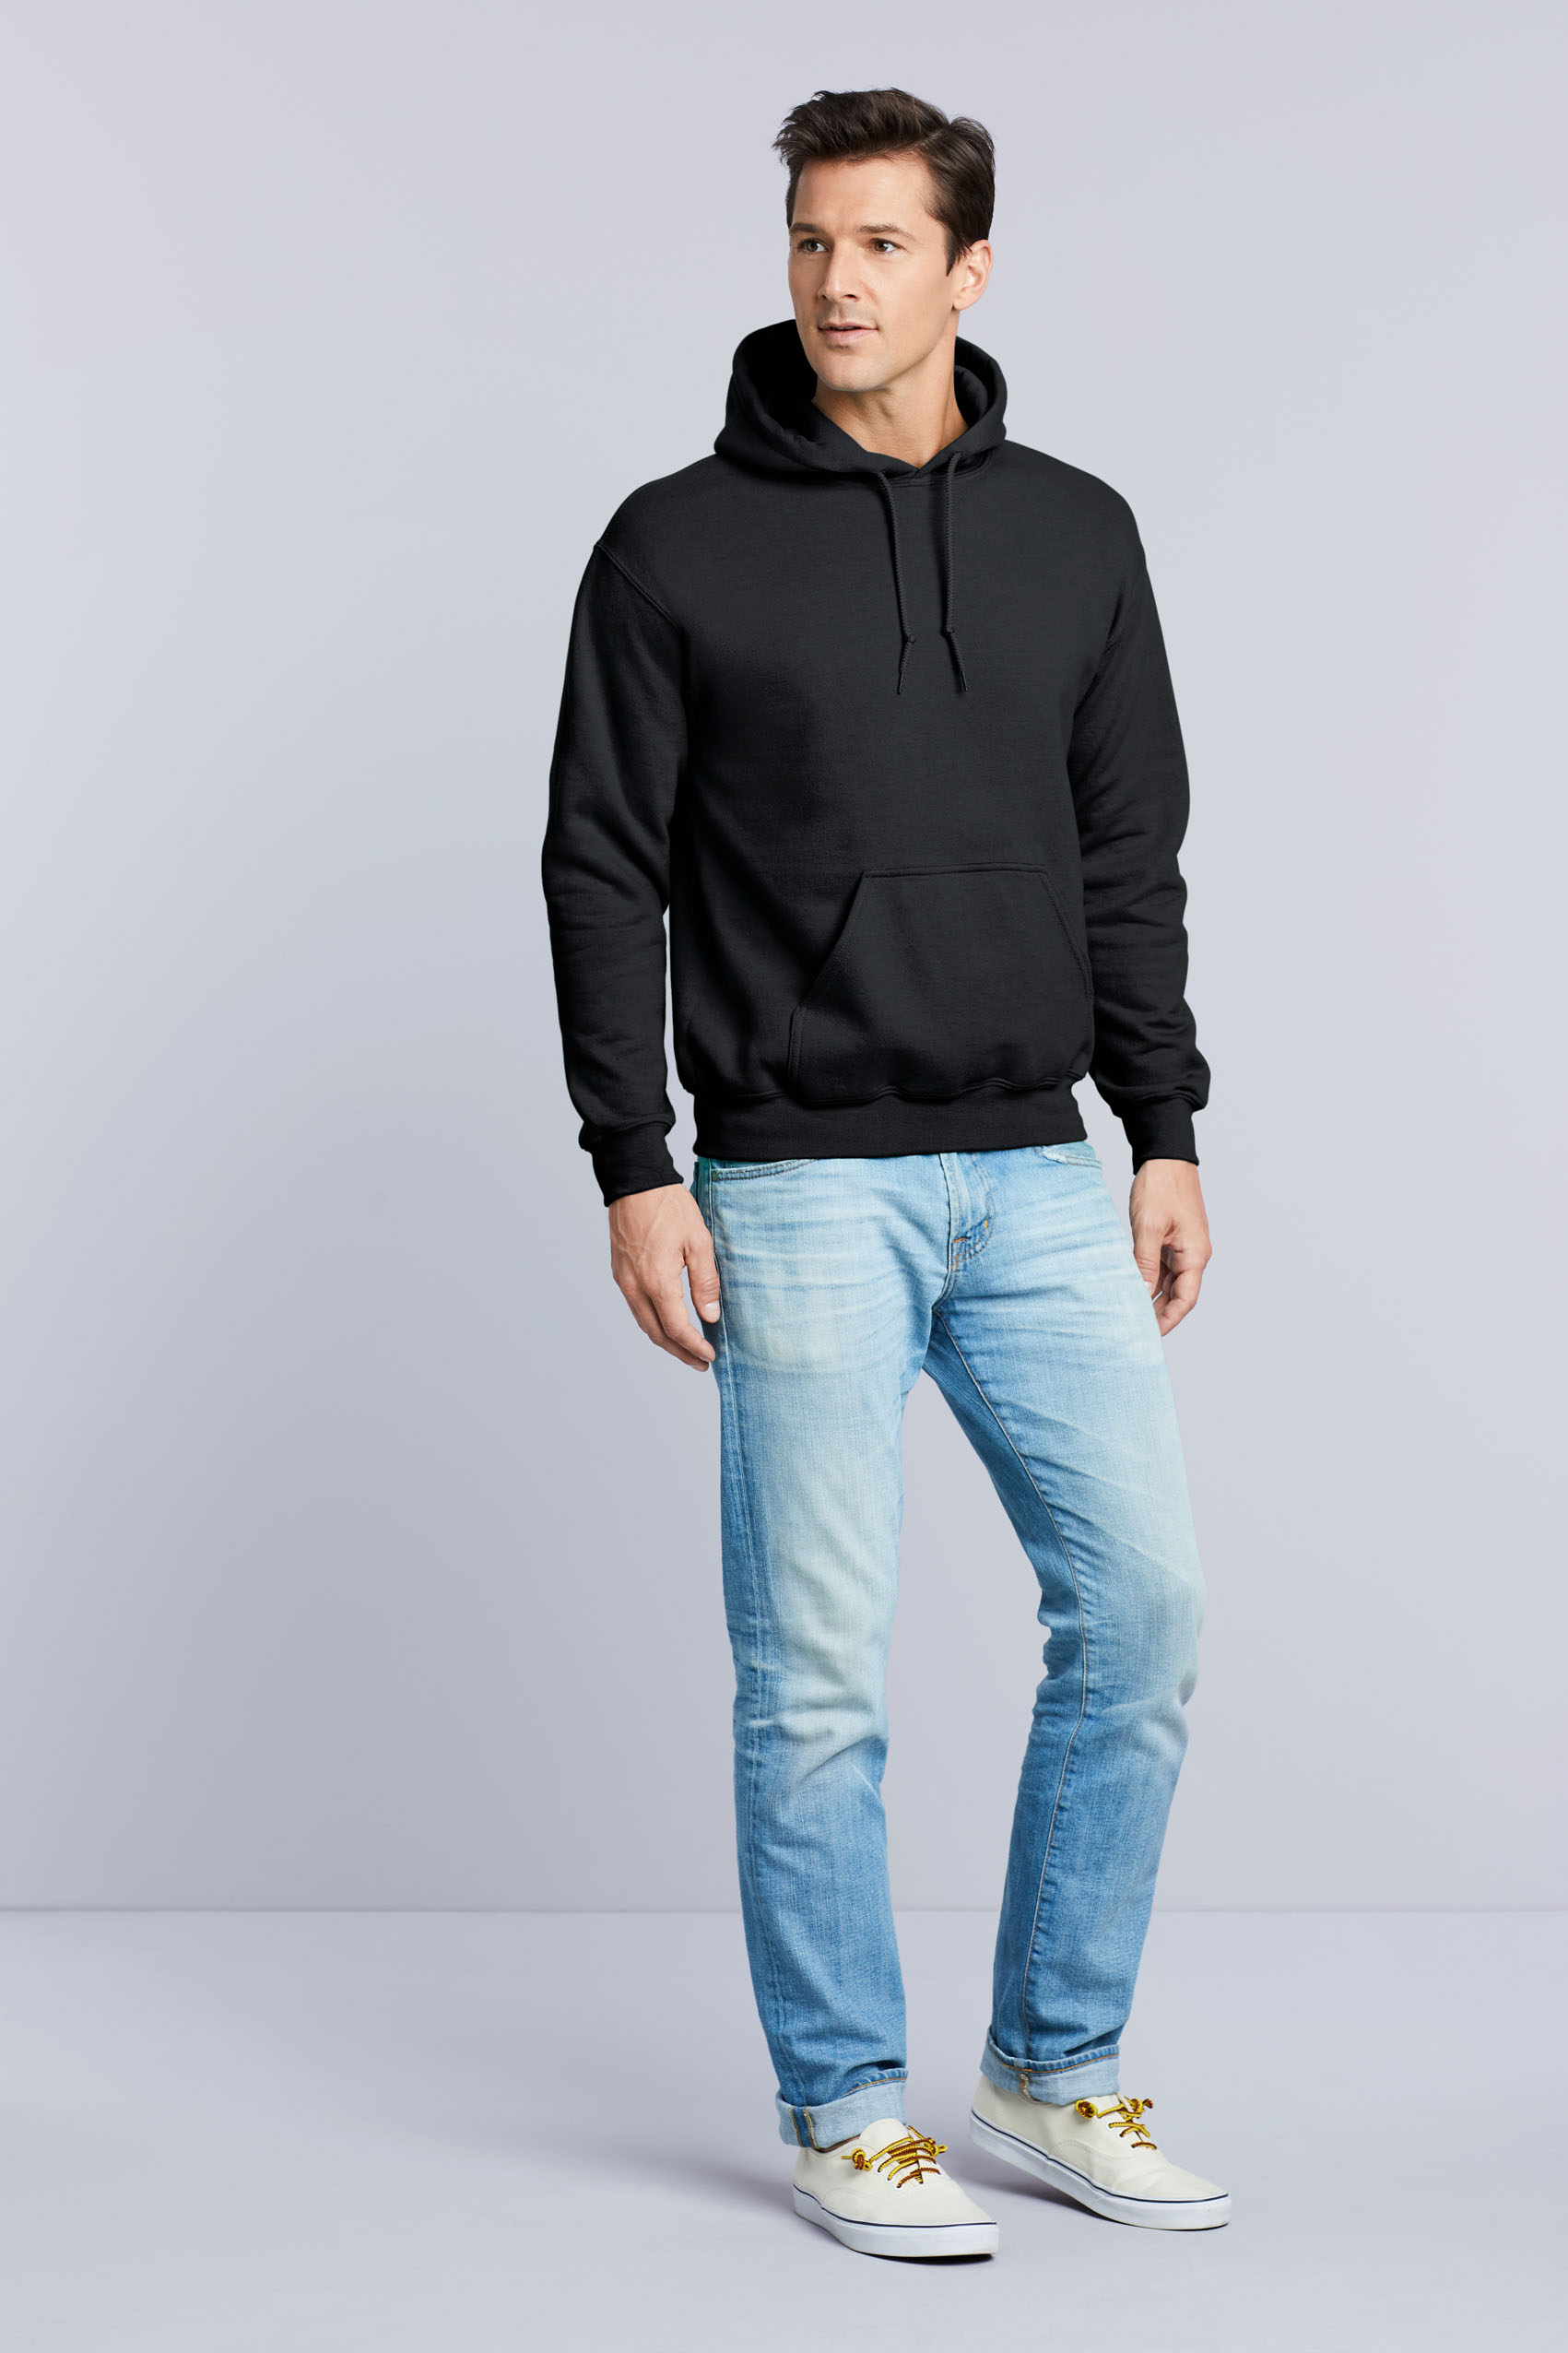 Gildan Sweater Hooded DryBlend